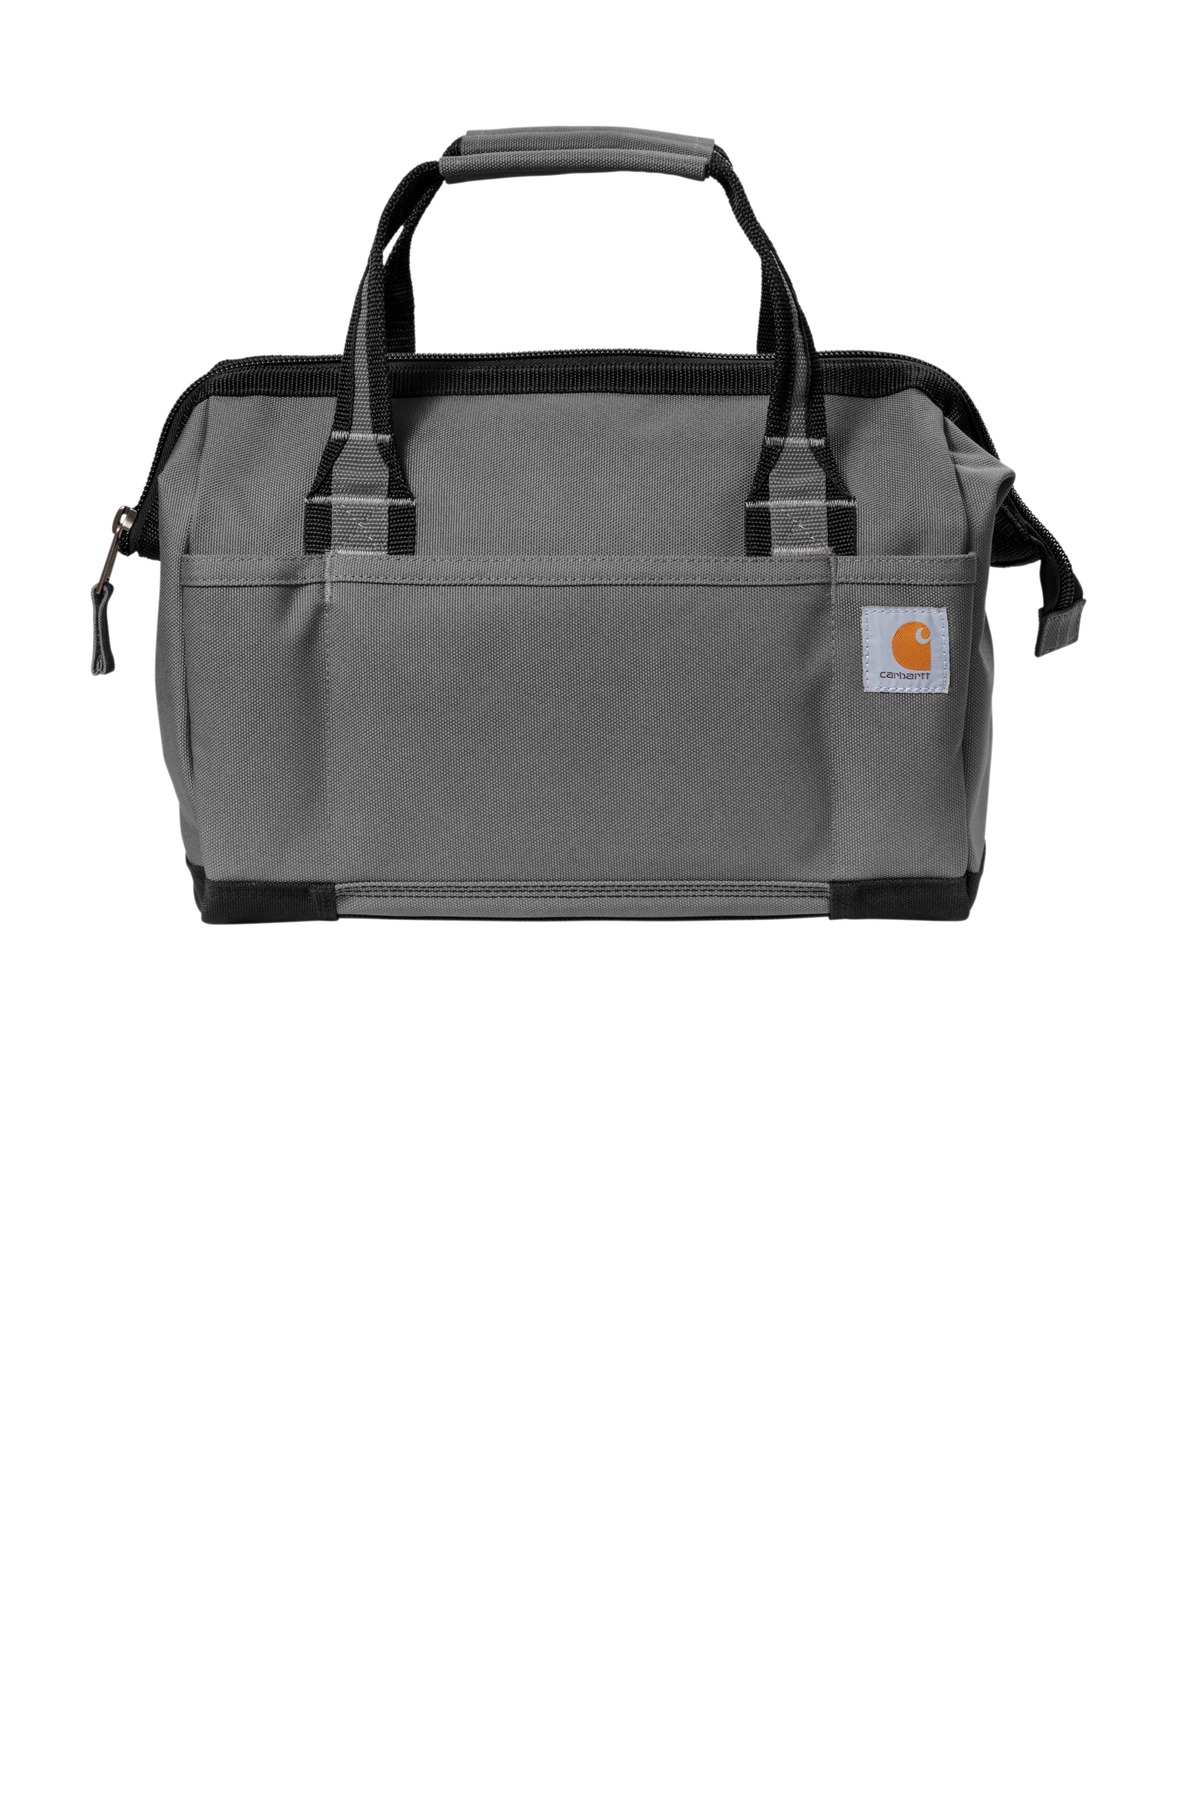 Carhartt Foundry Series 14 Tool Bag-